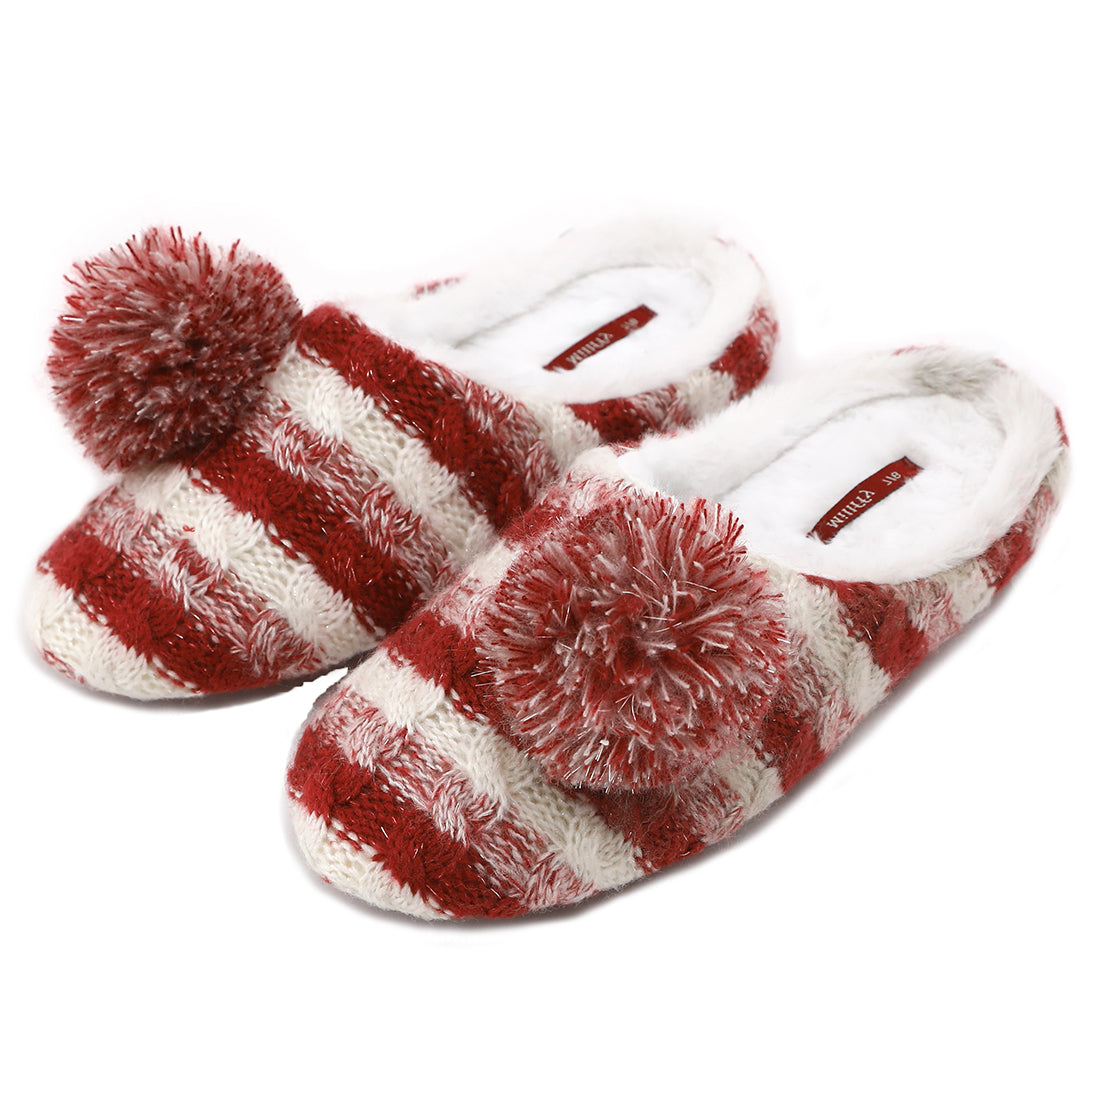 Millffy pompom slippers kawaii cozy knit slippers for women office slippers pillow slides slippers